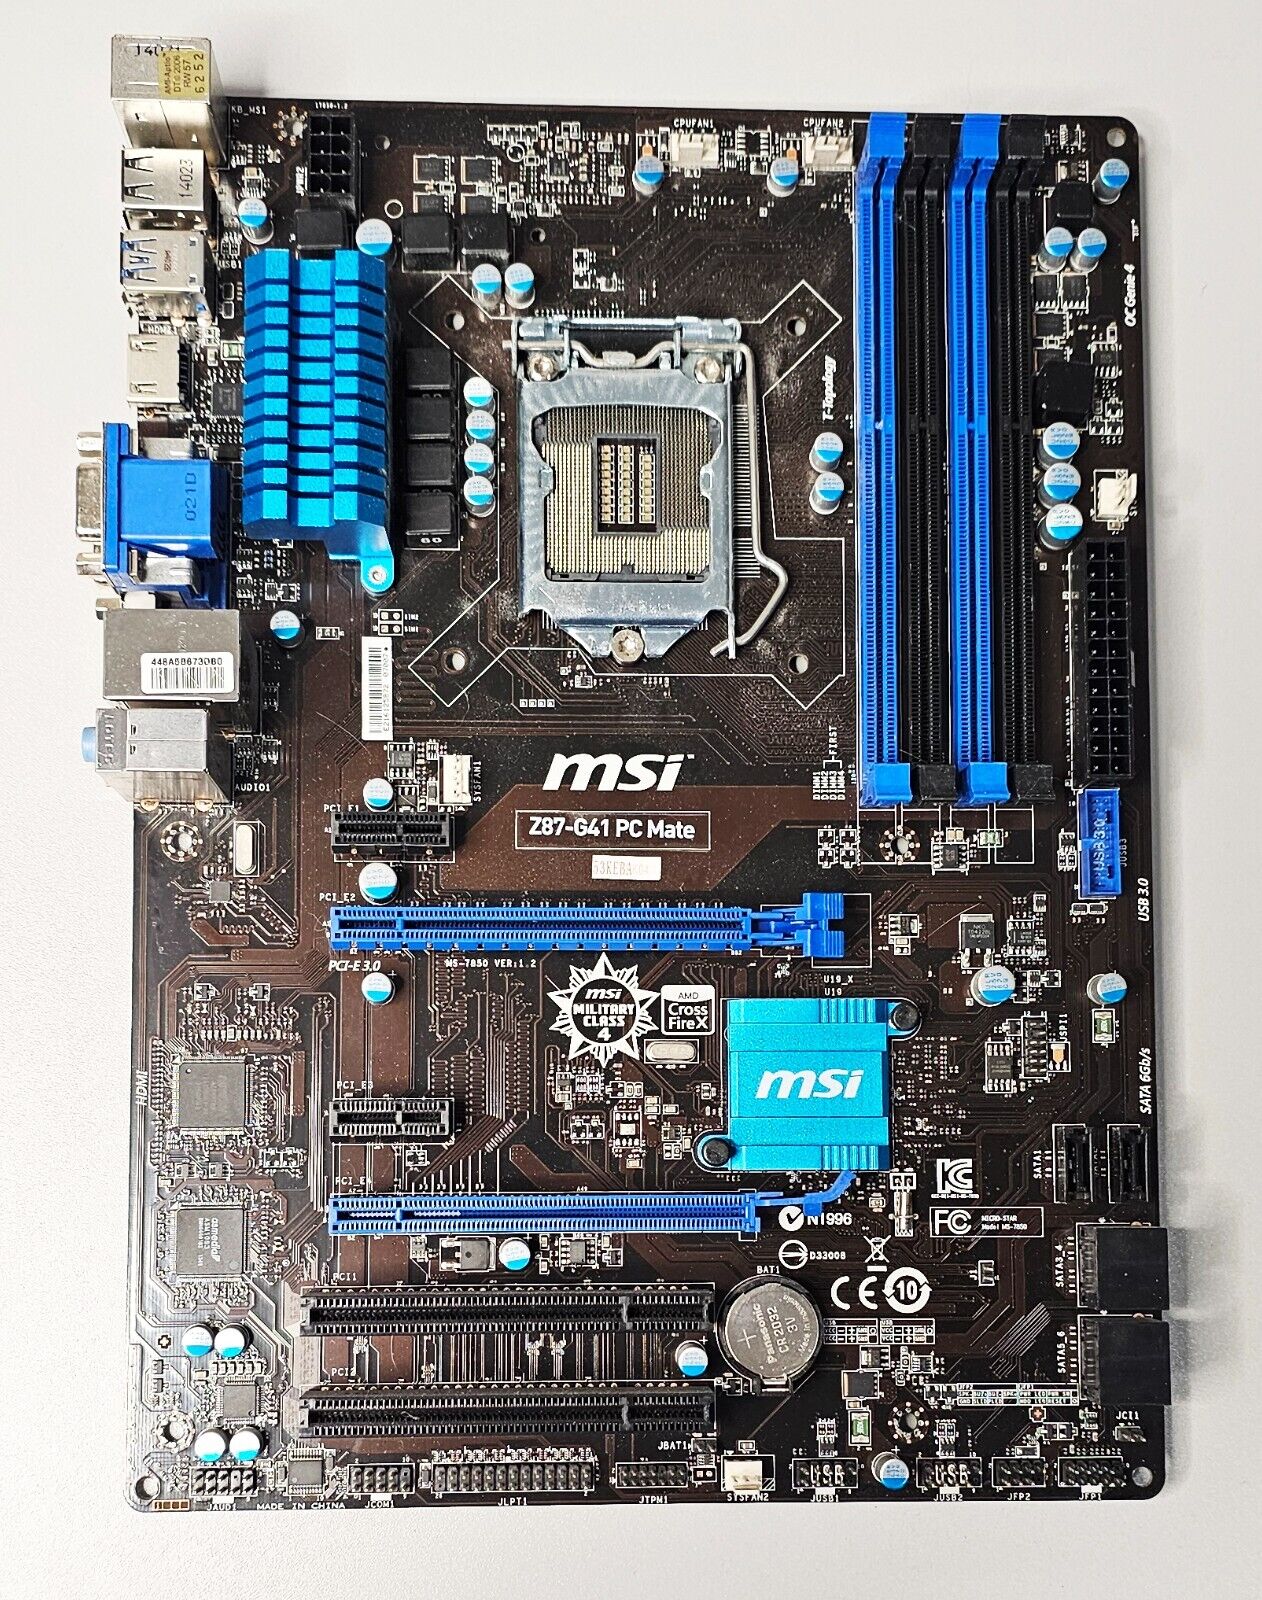 MSI Z87-G41 PC Mate Intel Z87 ATX  LGA 1150 DDR3 Motherboard